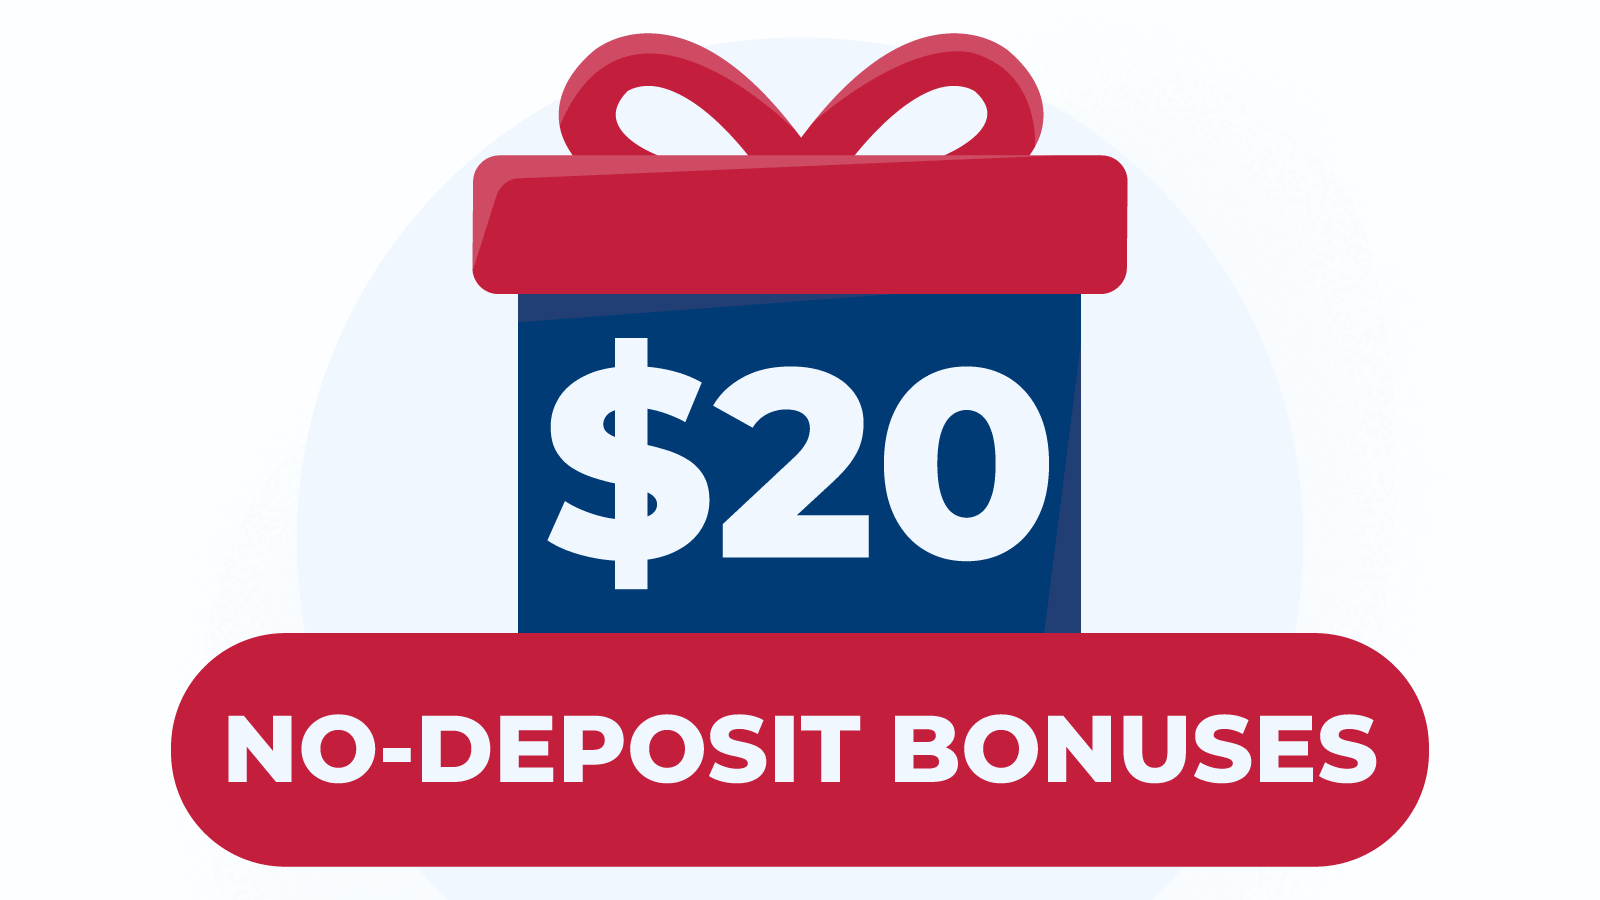 C$20 no-deposit bonuses